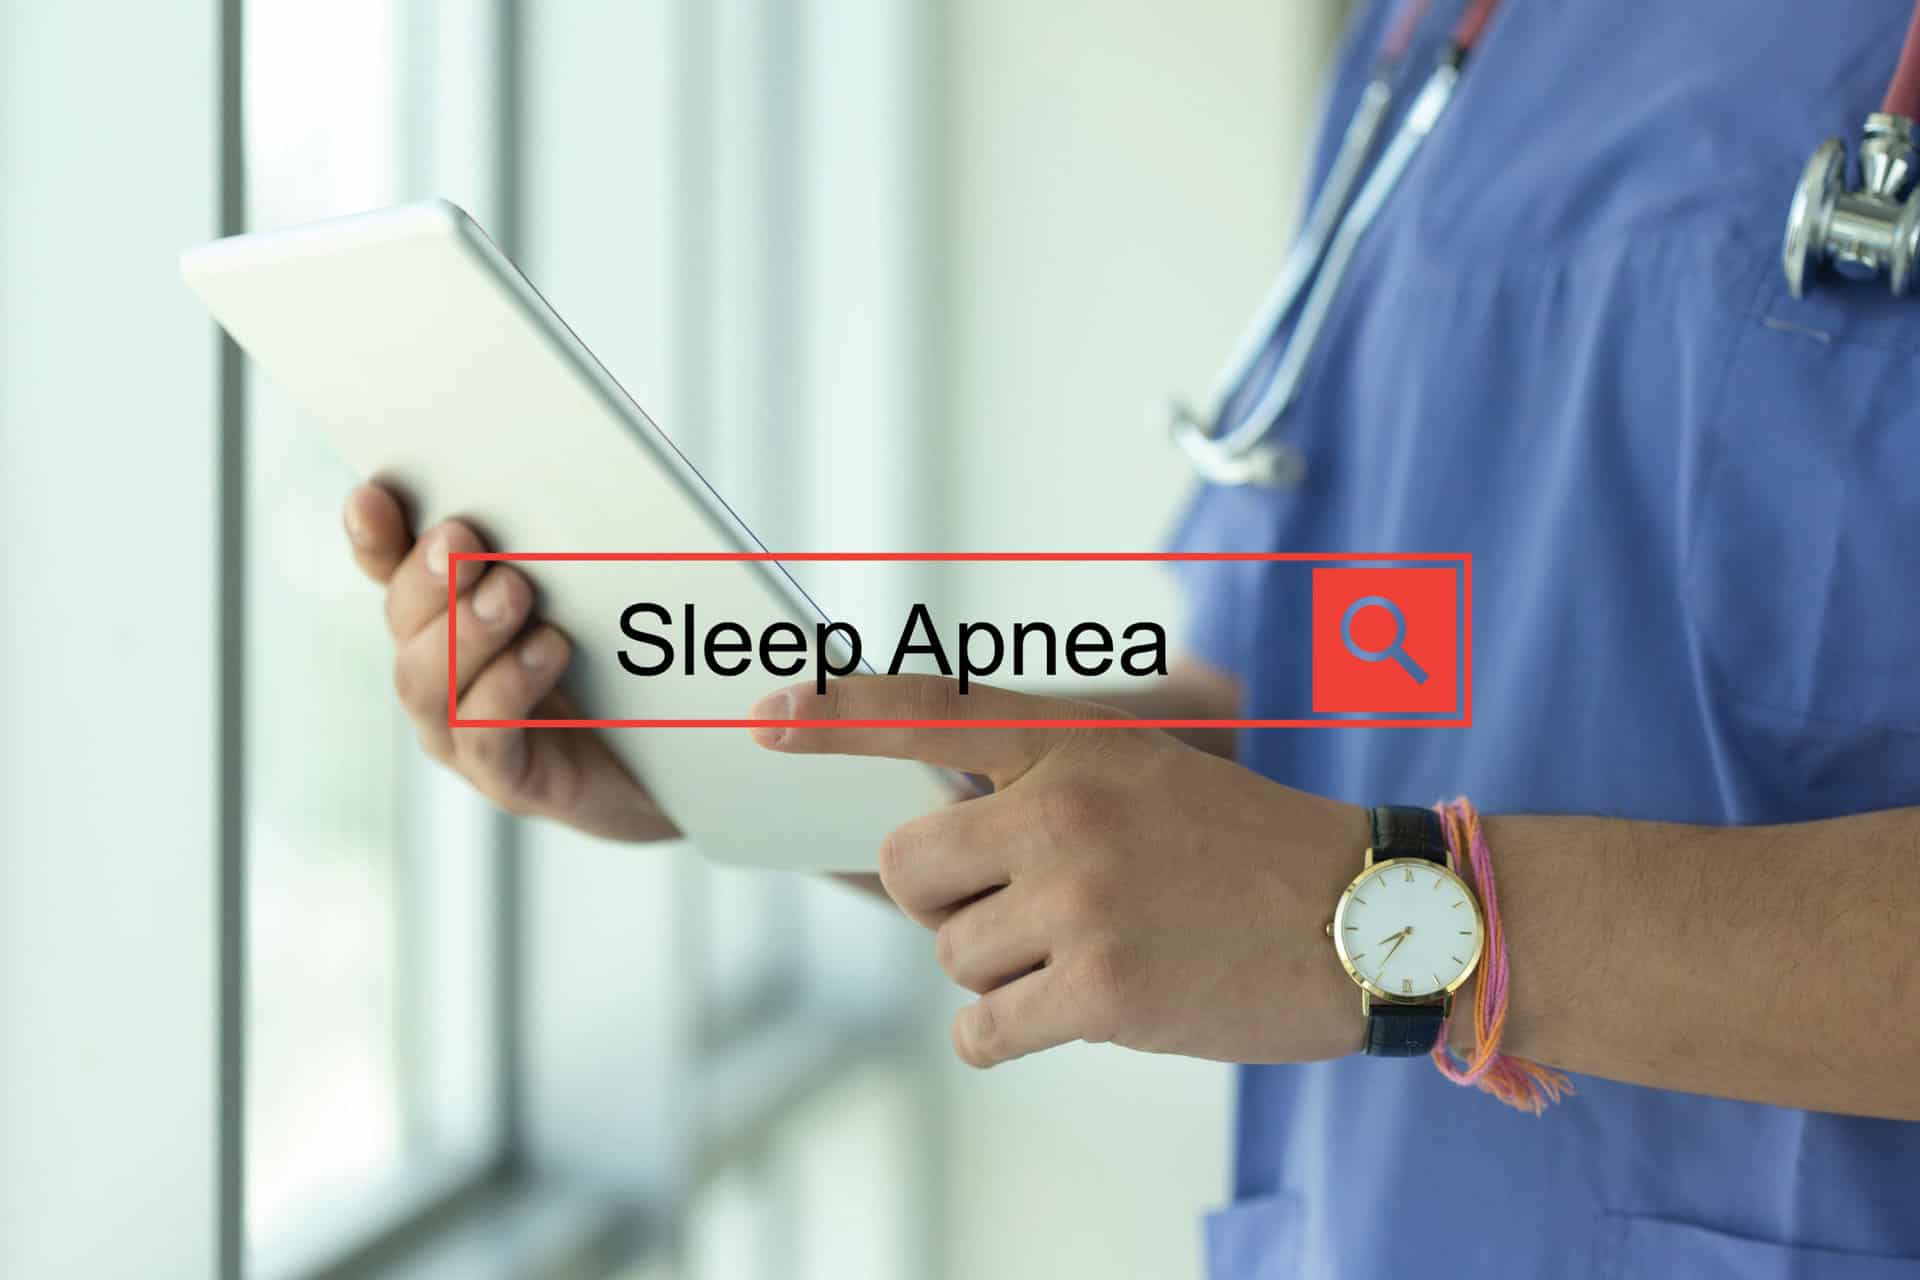 Doctor Holding Chart, Search Bar with "Sleep Apnea" Written Inside